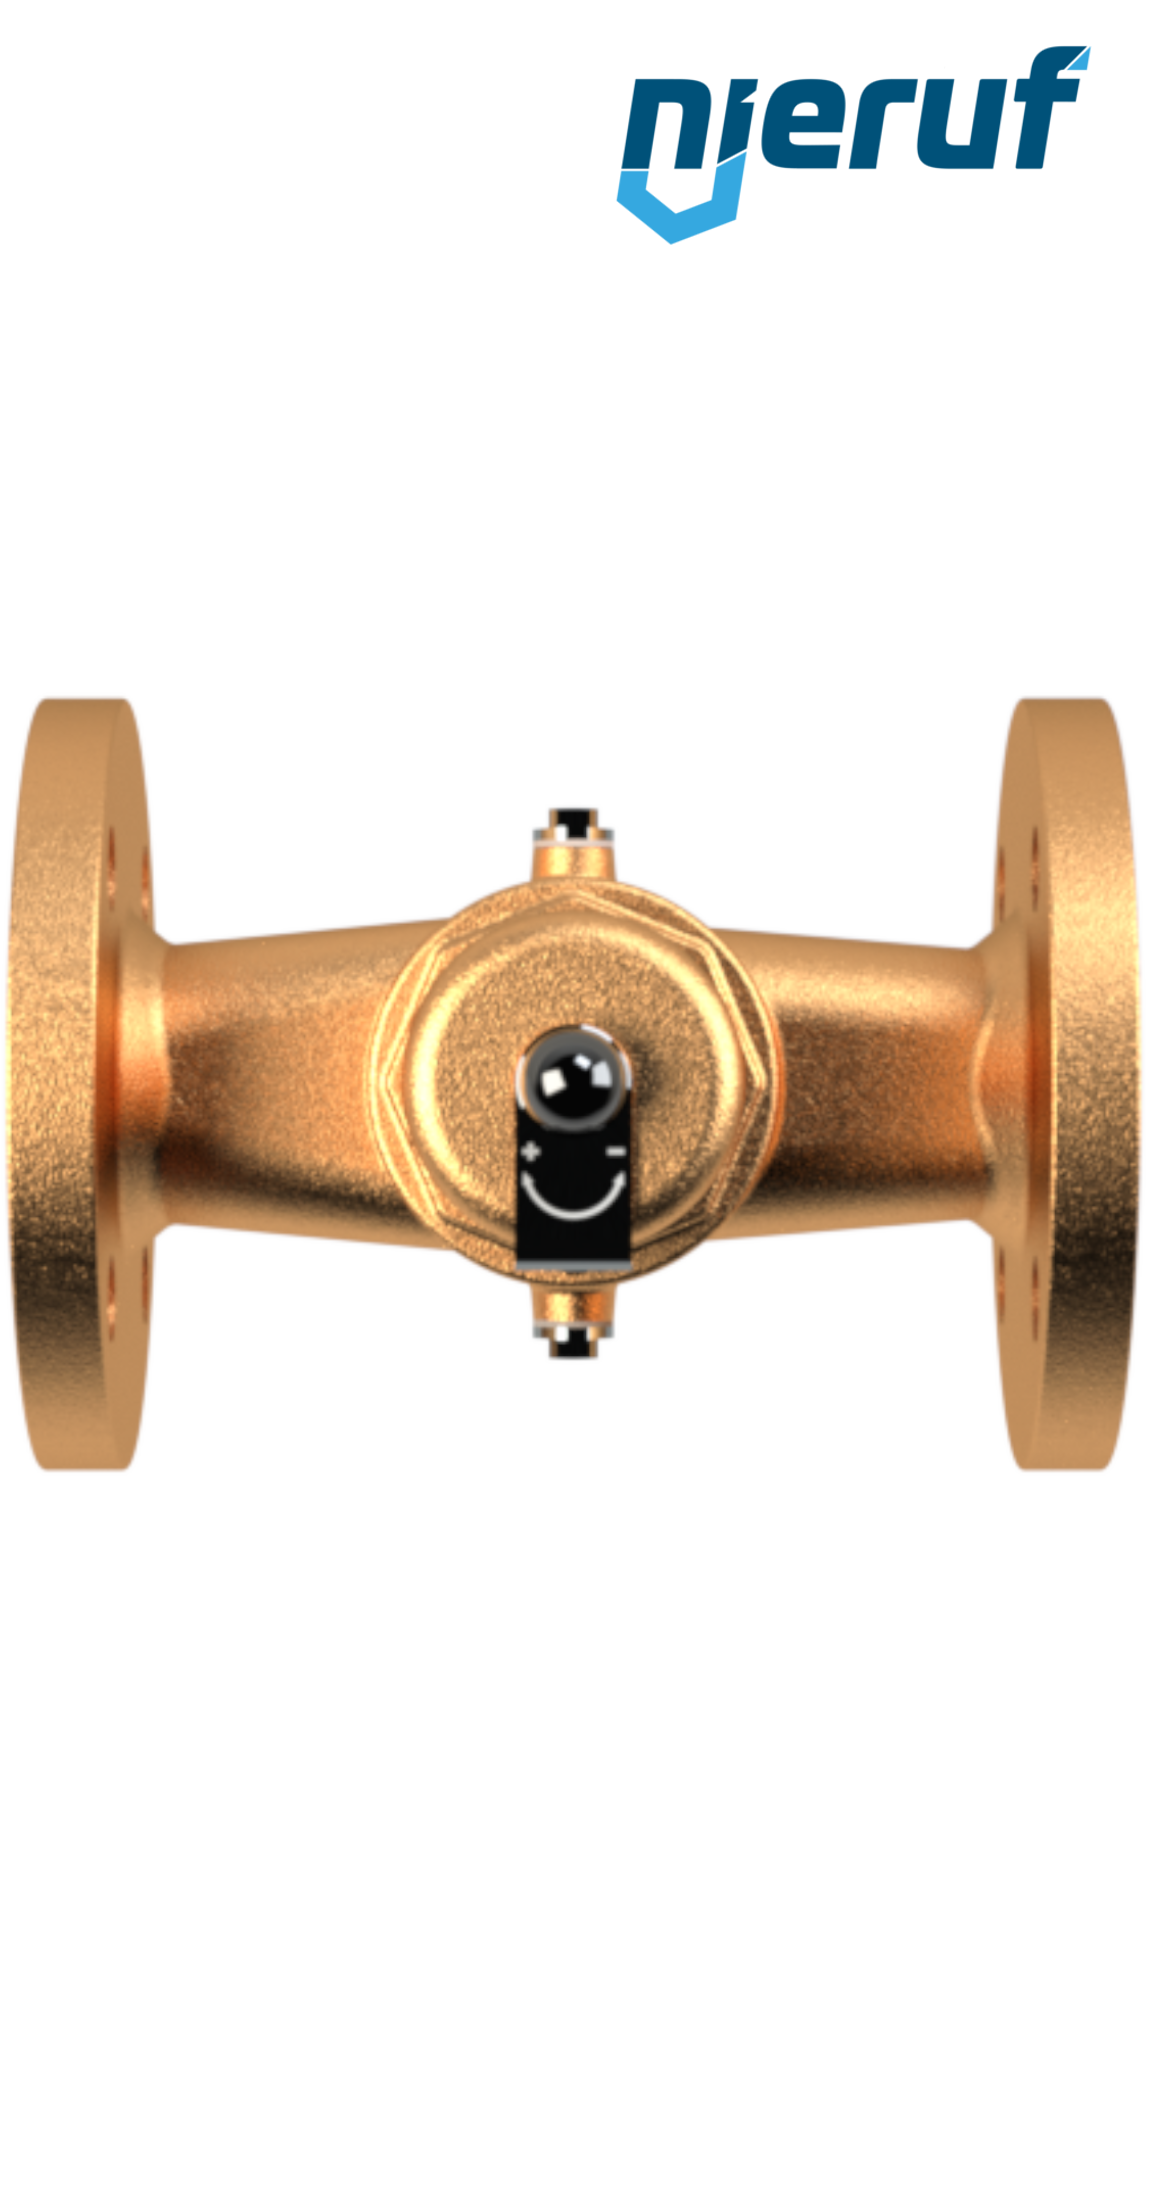 pressure reducing valve DN 20 PN16 DM06 gunmetal/brass FKM 0.5 - 2.0 bar